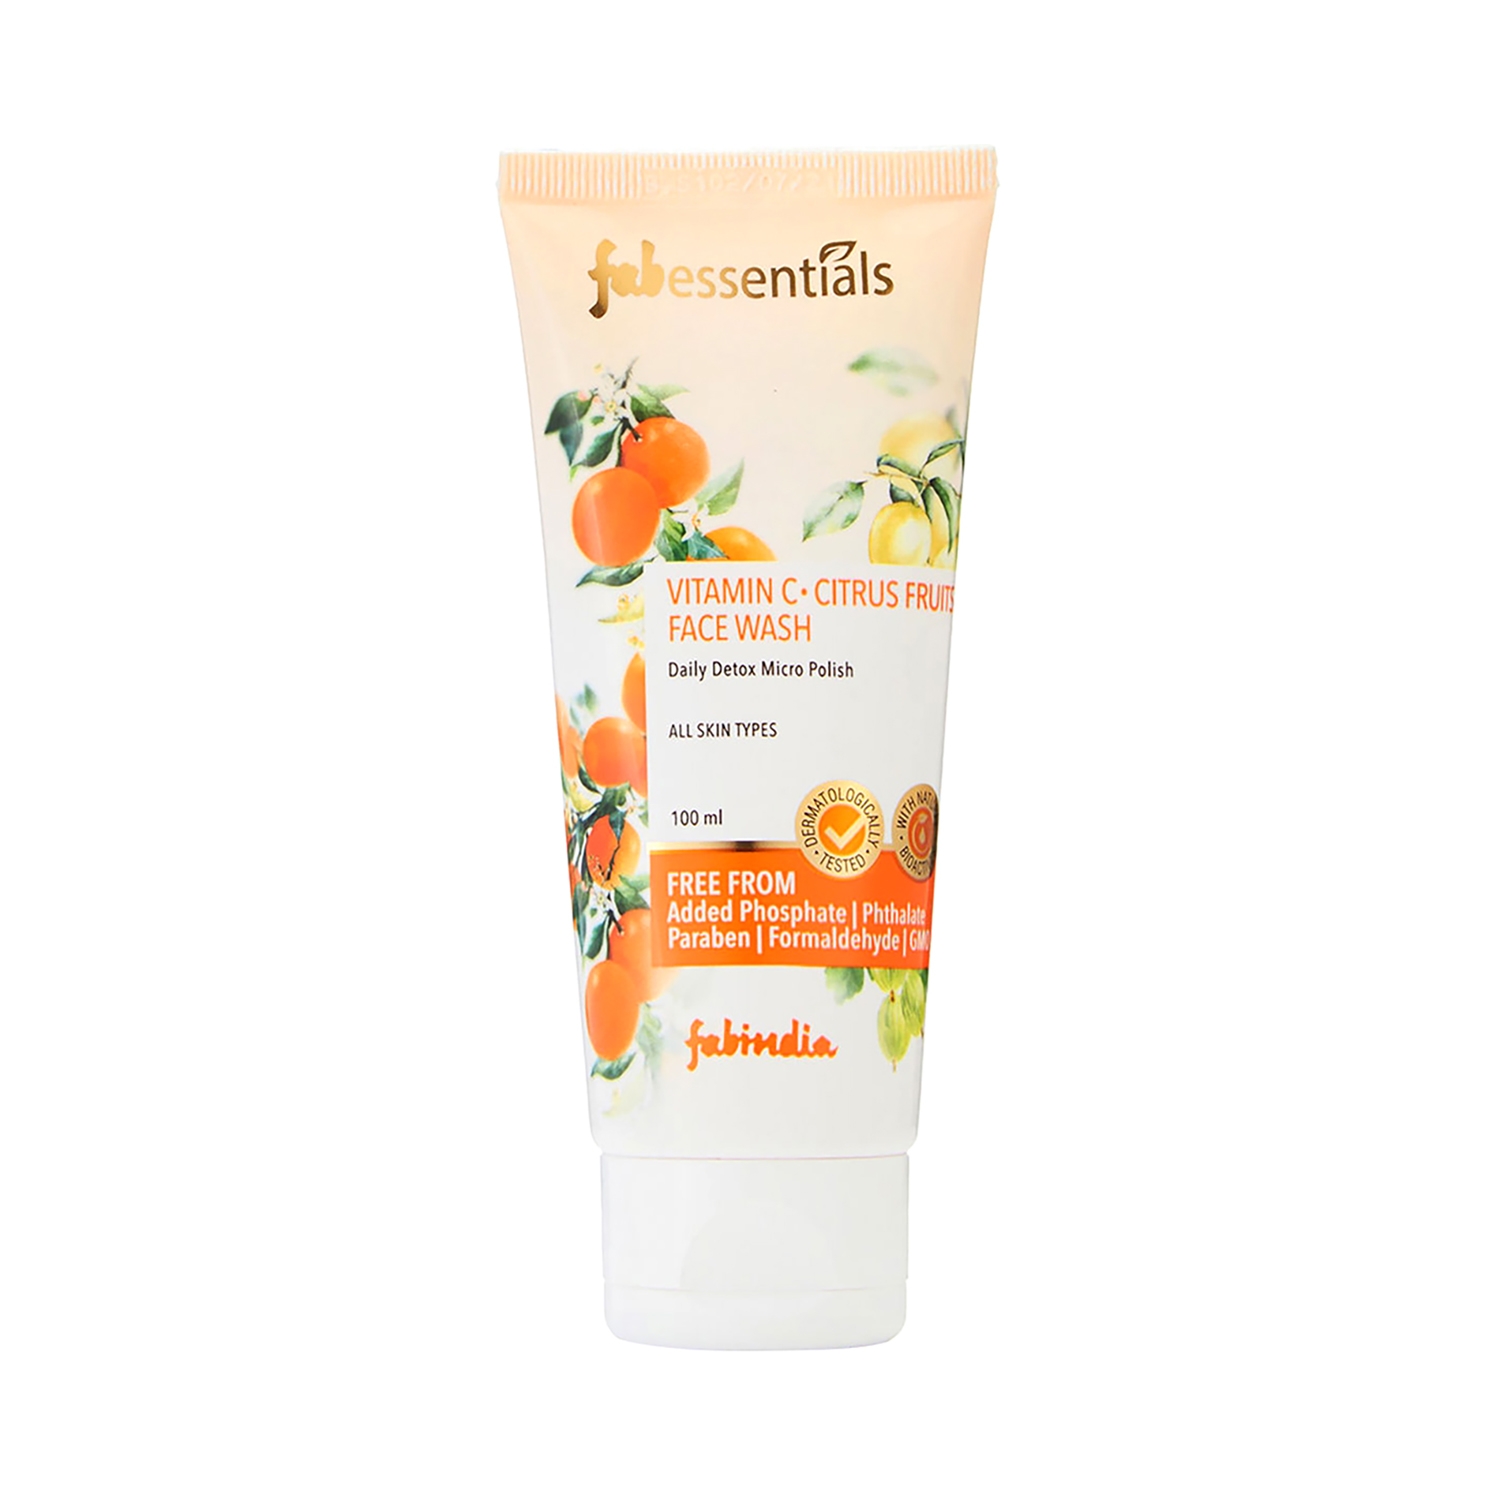 Fabessentials by Fabindia | Fabessentials by Fabindia Vitamin C Citrus Fruits Facewash (100ml)